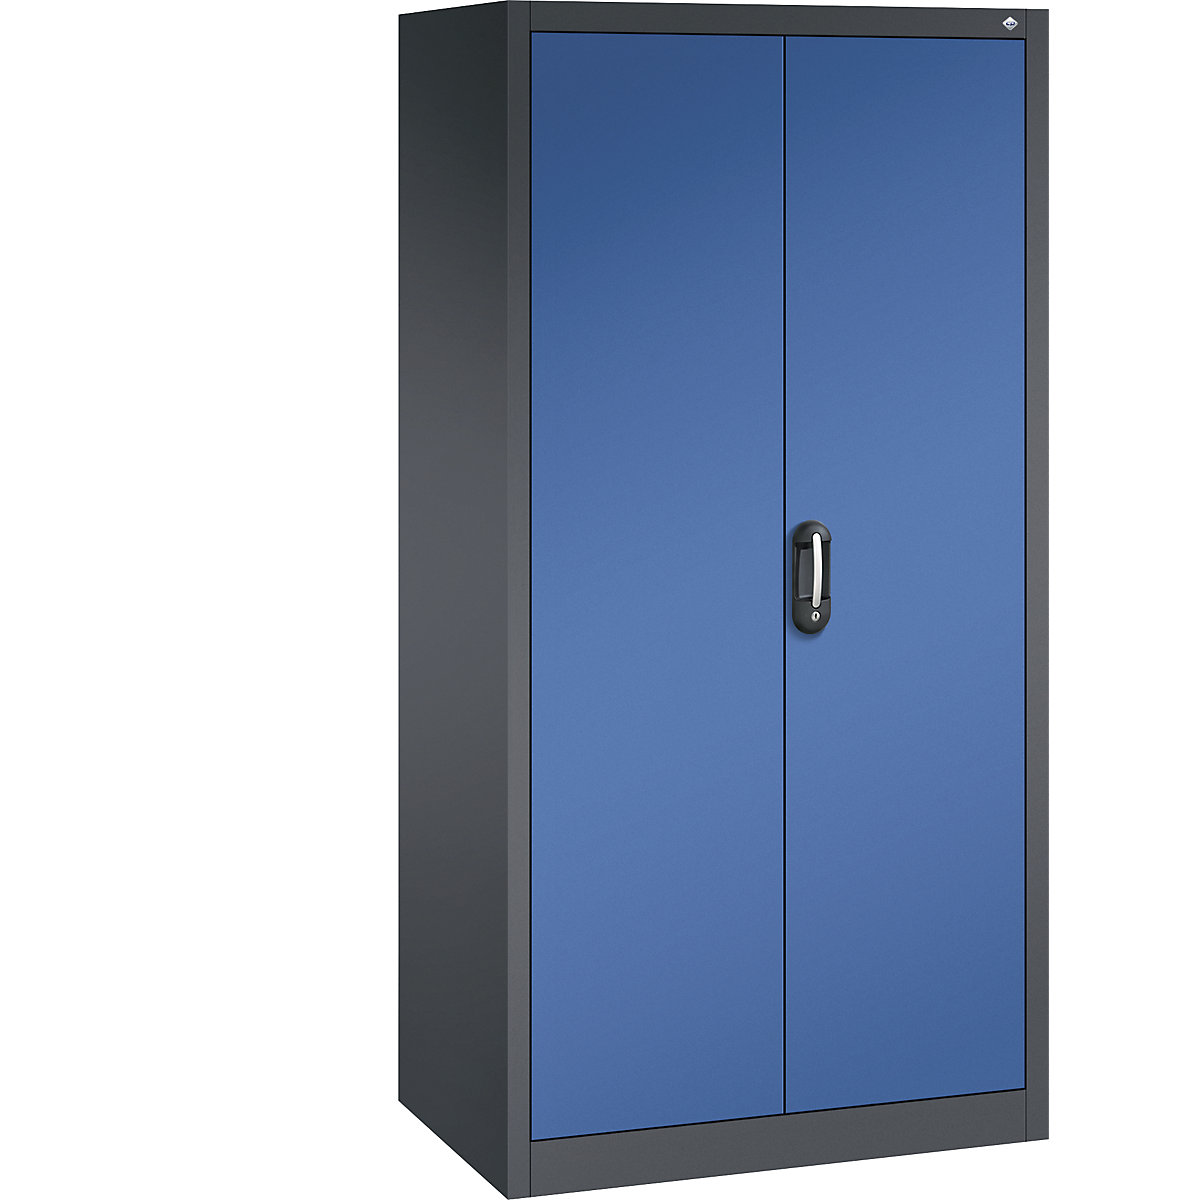 ACURADO universal cupboard – C+P, WxD 930 x 600 mm, black grey / gentian blue-15